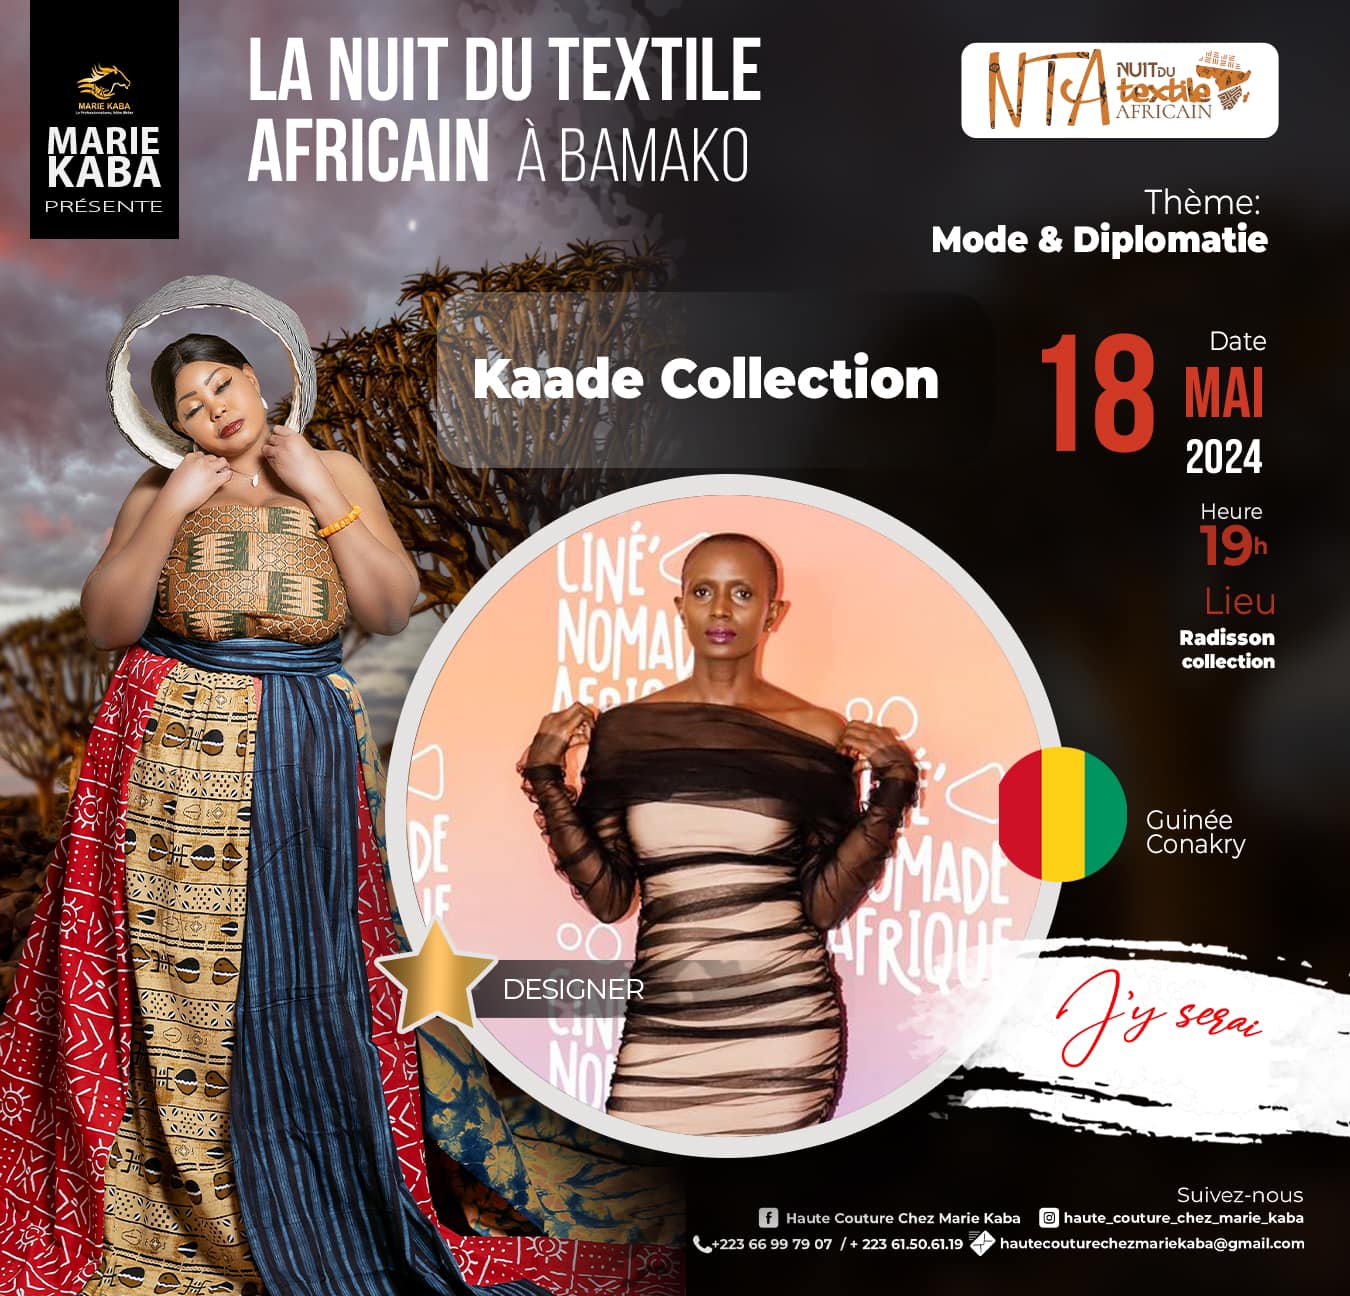 LA NUIT DU TEXTILE AFRICAIN A BAMAKO presents KAADE Collection by Binta Diallo